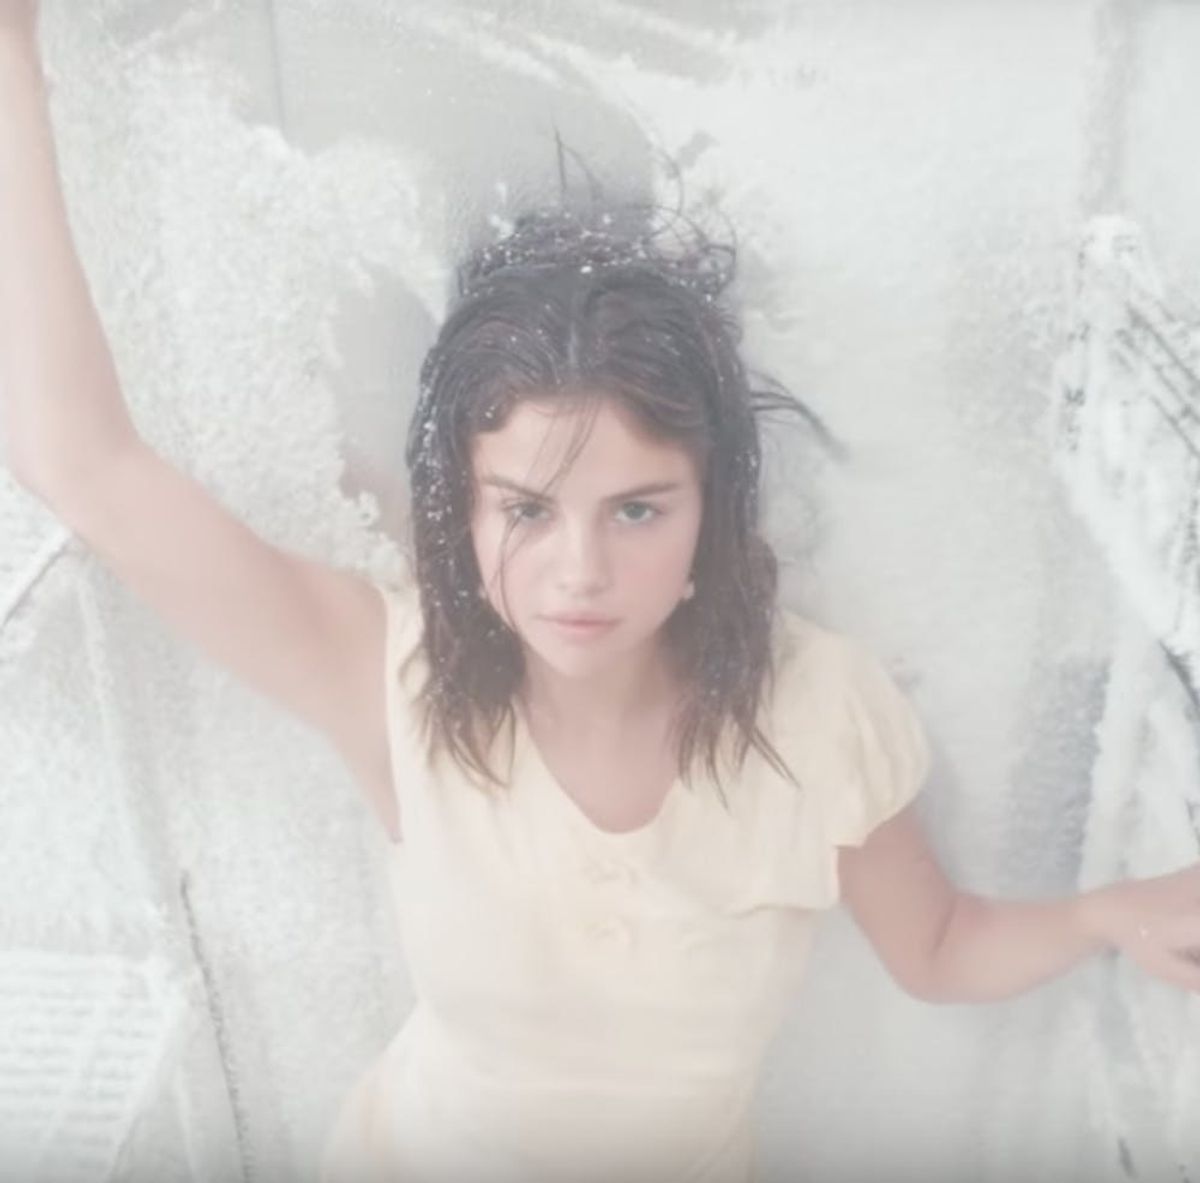 Watch Selena Gomez’s New “Fetish” Music Video